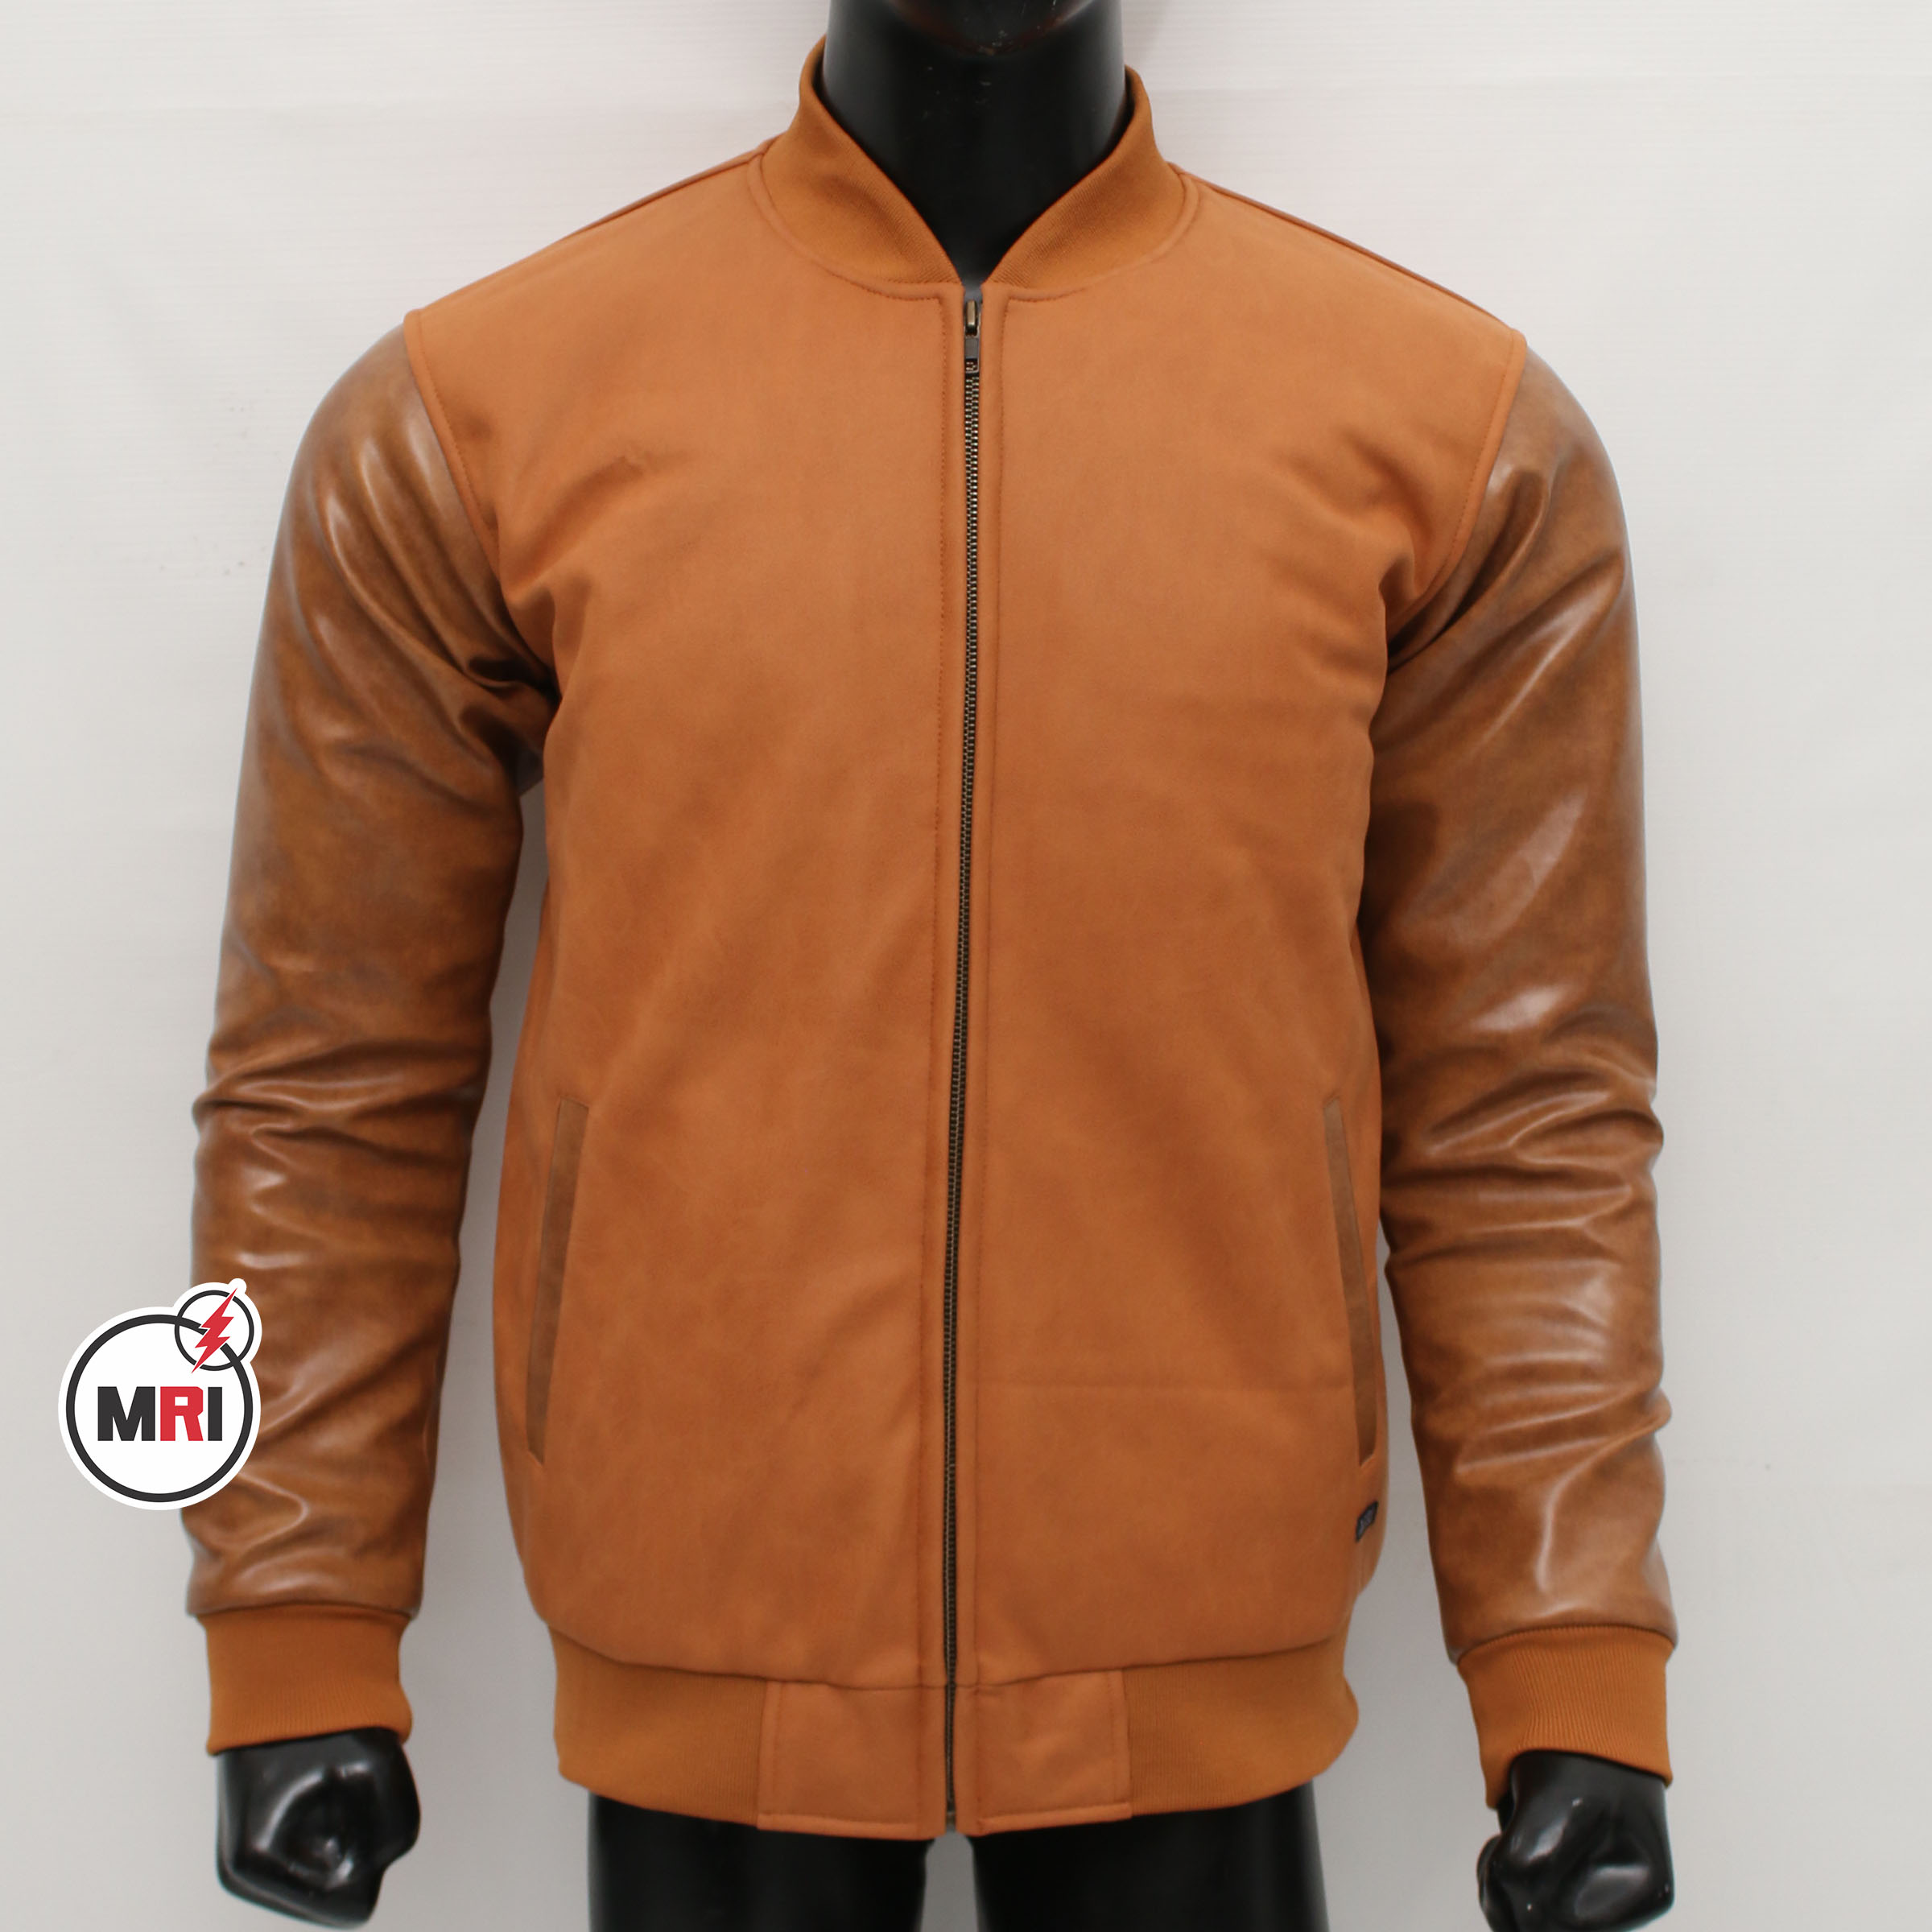 Sueede Leather Jacket Plain